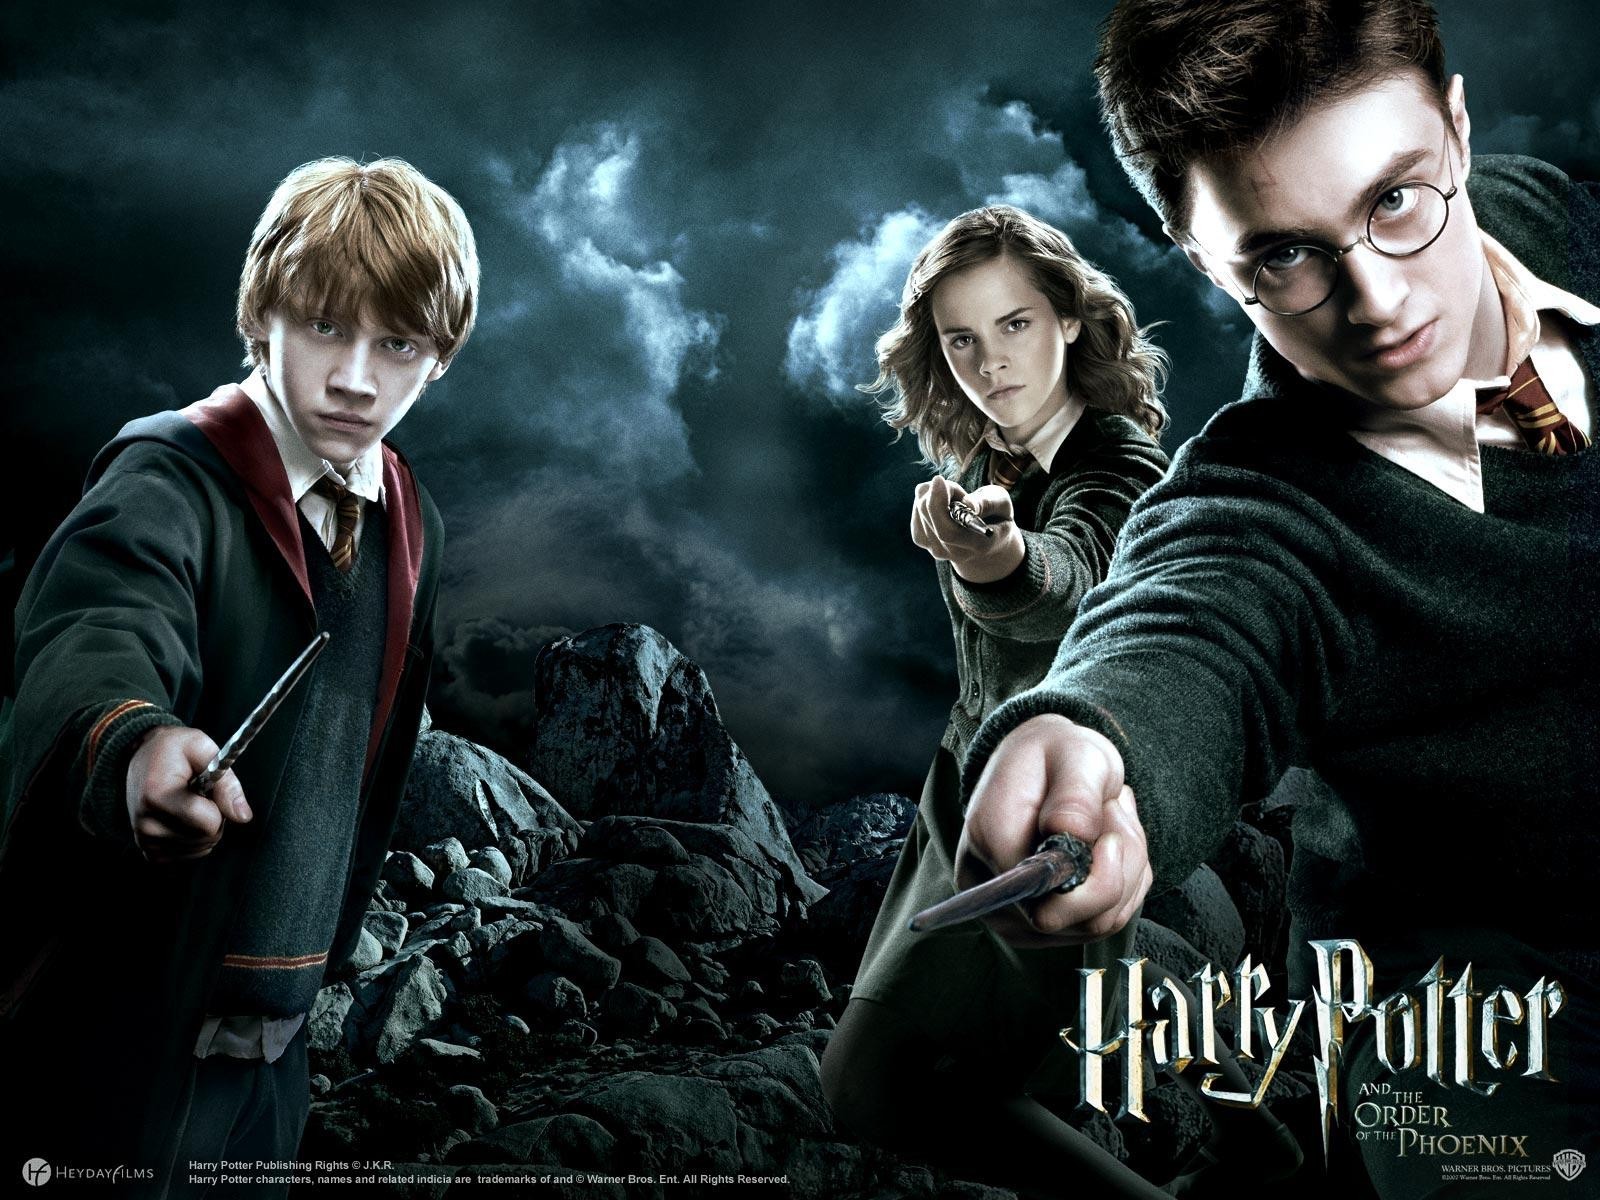 https://blogger.googleusercontent.com/img/b/R29vZ2xl/AVvXsEjO33hD8nh6xs2wdHYhiAvdMezmKRhUkXvQ76otlh7xzvw9OeZgFaJILSRbud25fnvN3YkRgLAMTh8VJF20Ft9LO7LhtBhKW7TU3QS8wnDRHuCvu-6SfWYONA4VzKWU0Y_L96wQojCgEUM/s1600/Harry-Potter-And-The-Deathly-Hallows-Part-2.jpg